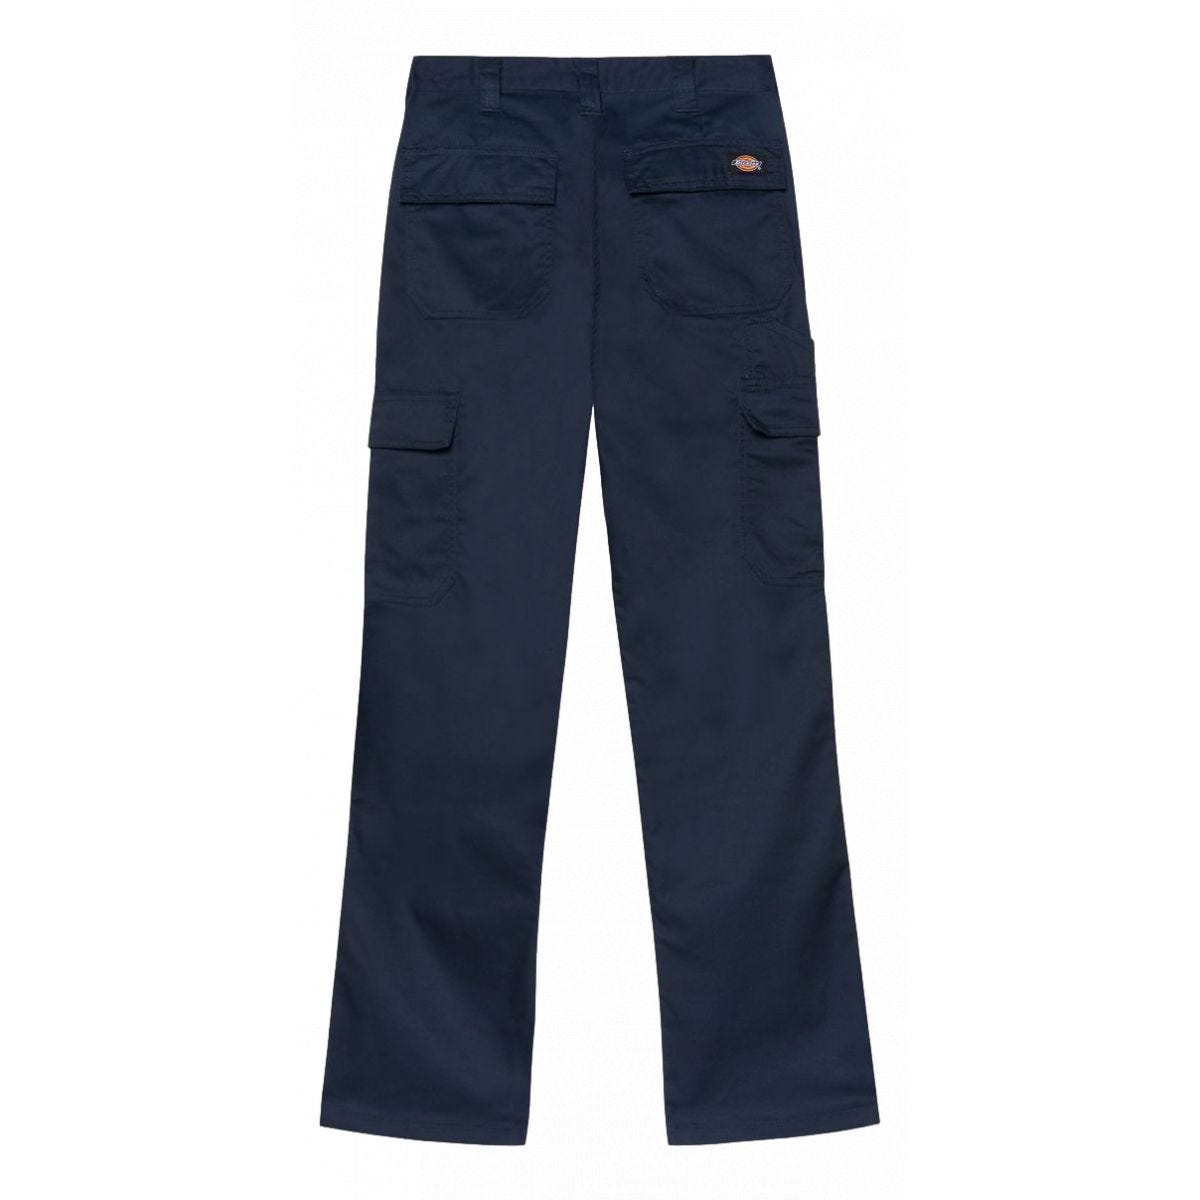 Pantalon Everyday Flex femme Bleu marine - Dickies - Taille 42 1